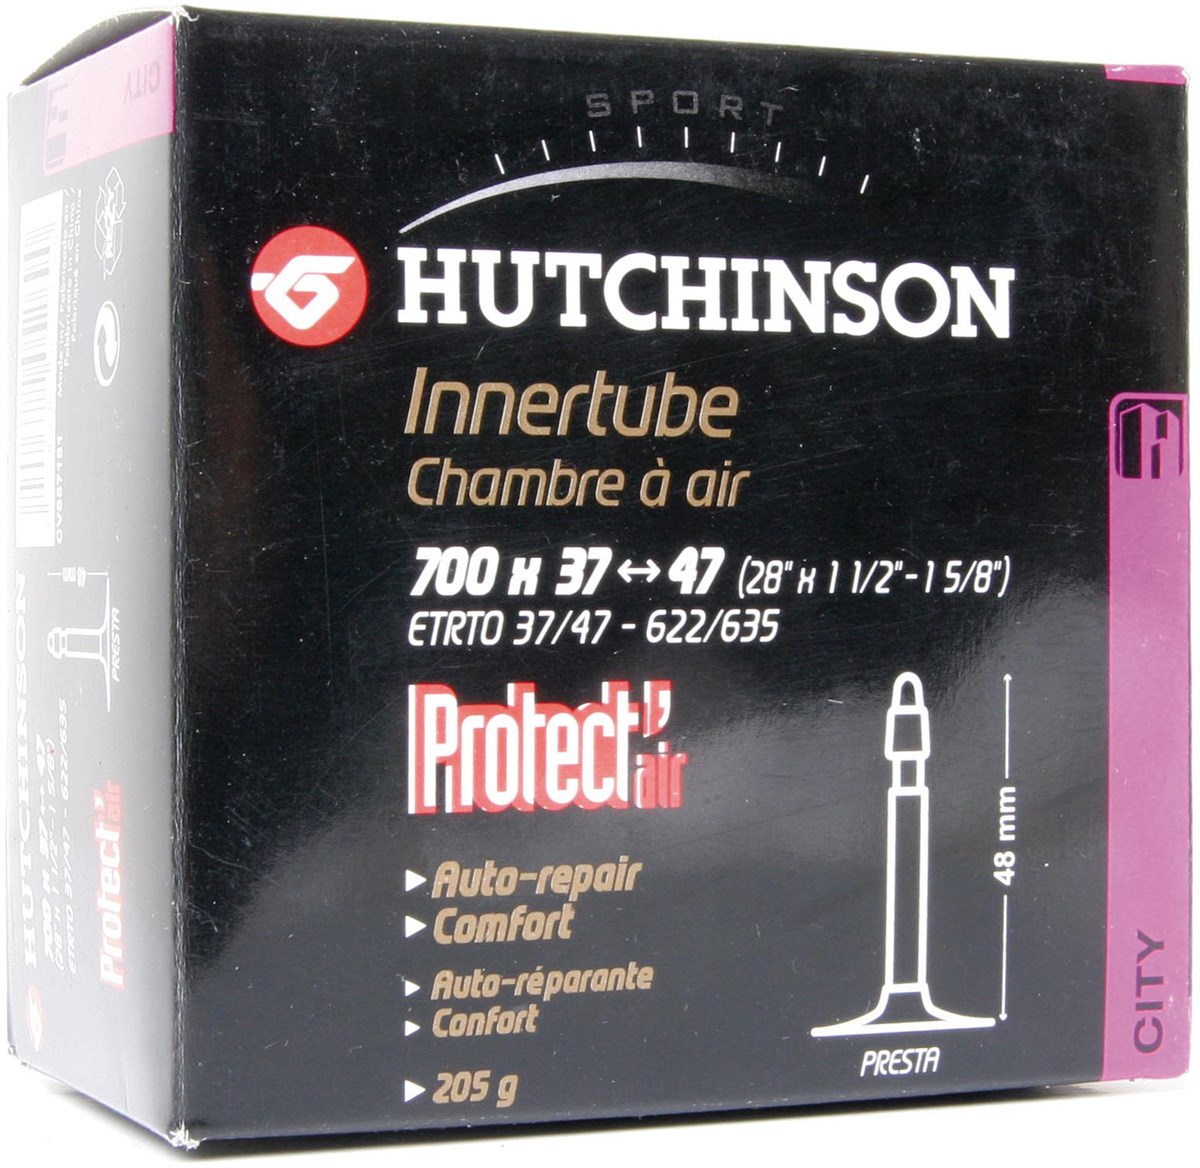 Hutchinson Protect Air City Tube product image